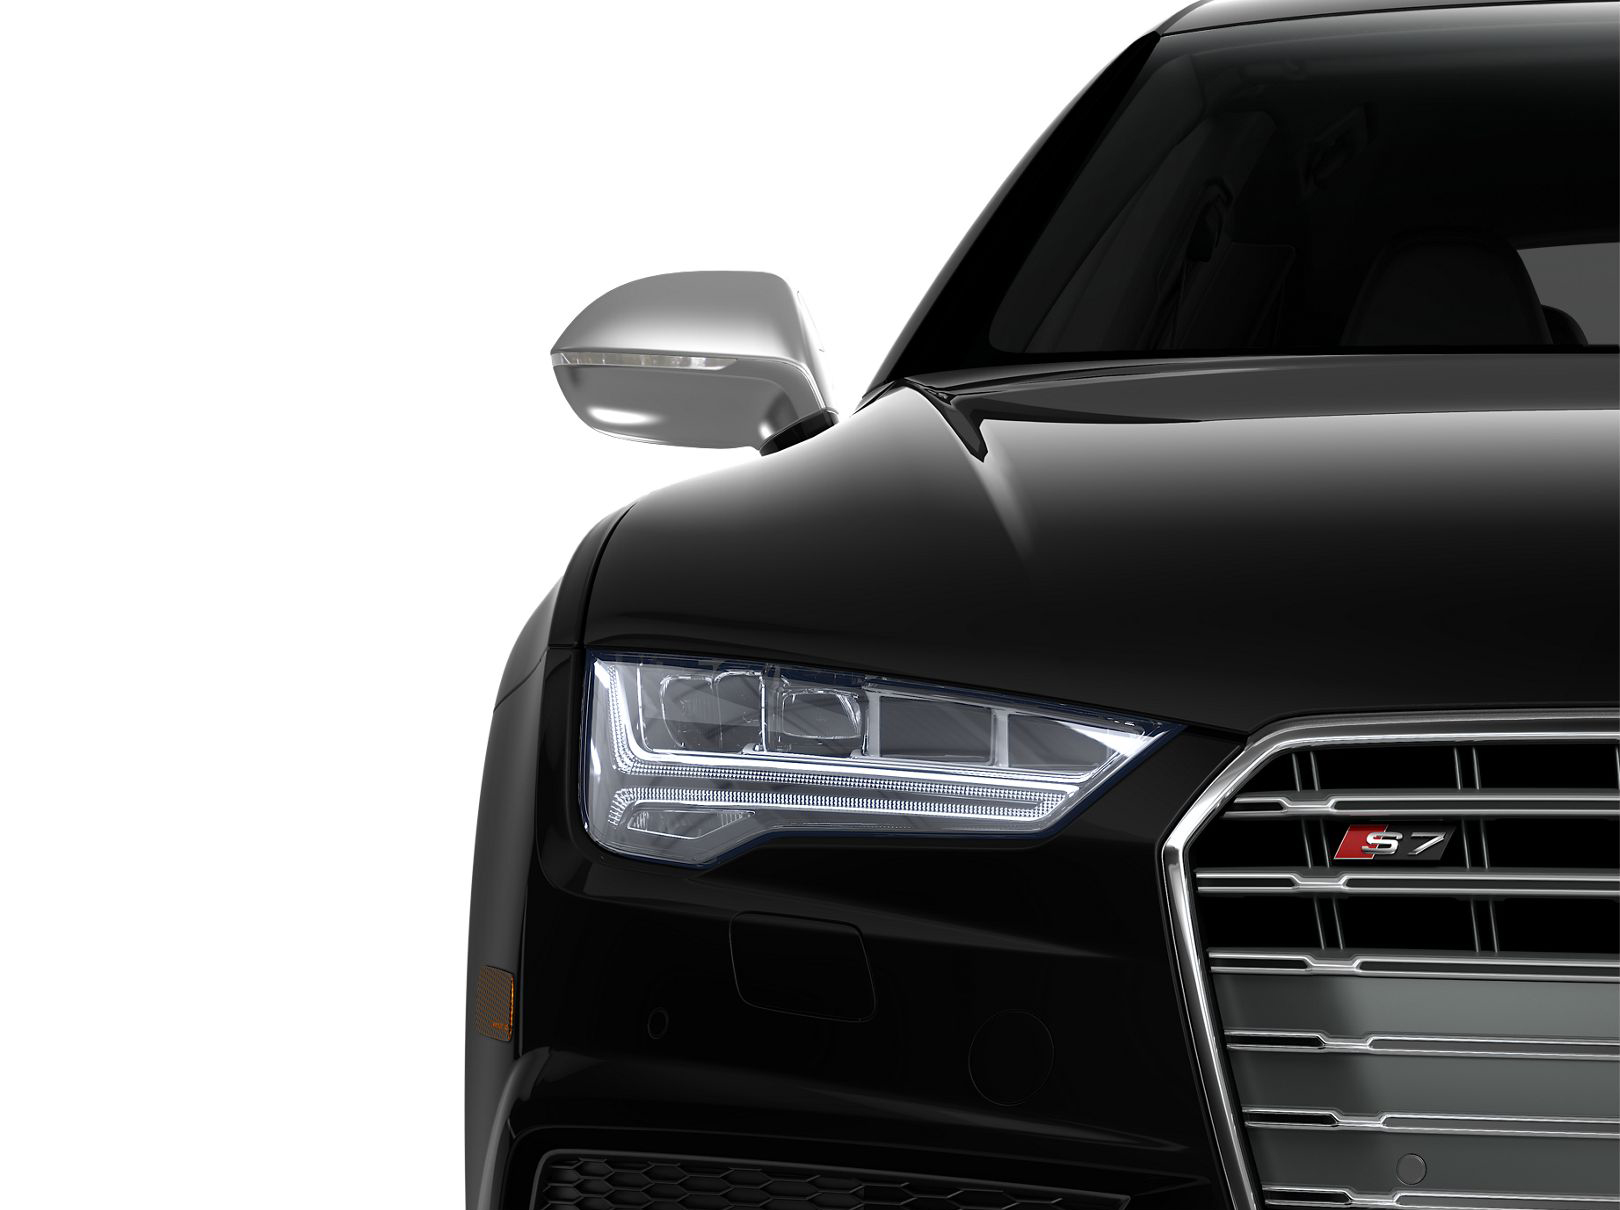 Audi S7 Prestige front view